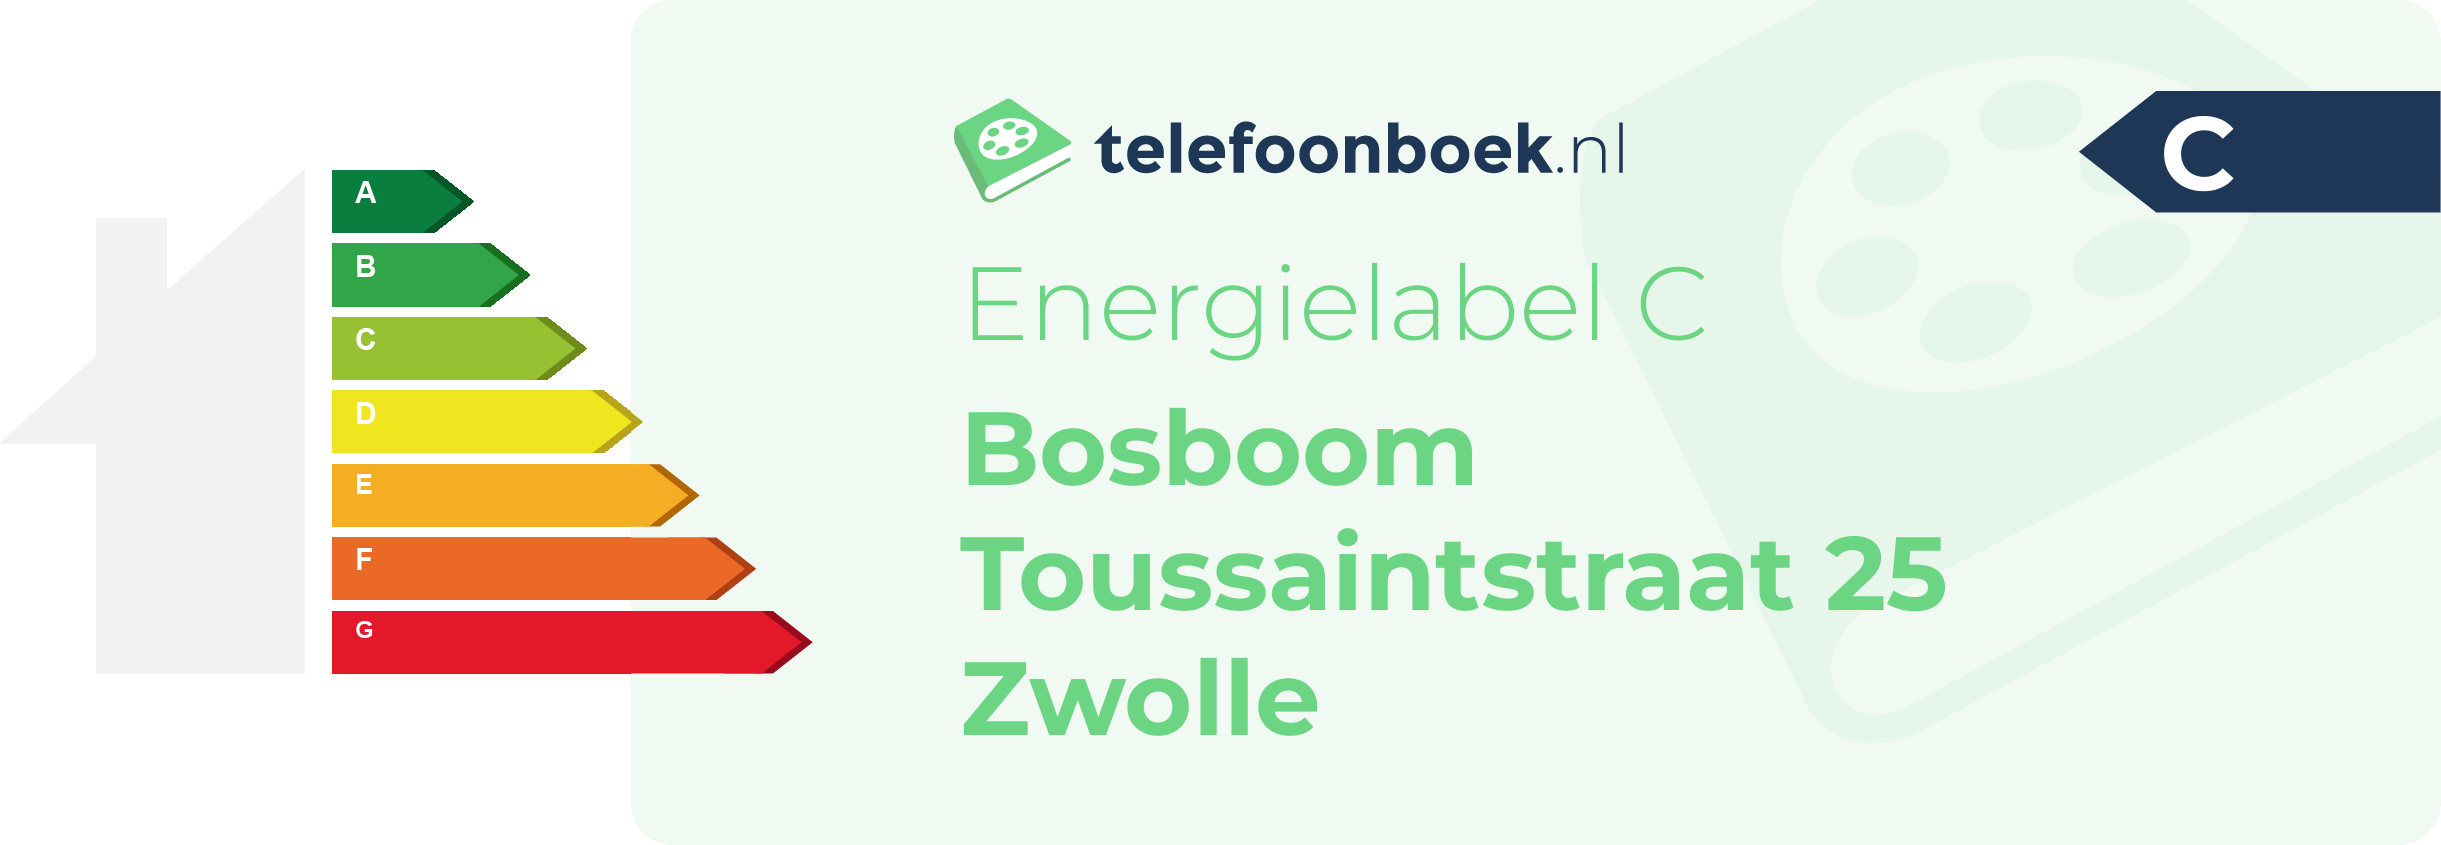 Energielabel Bosboom Toussaintstraat 25 Zwolle